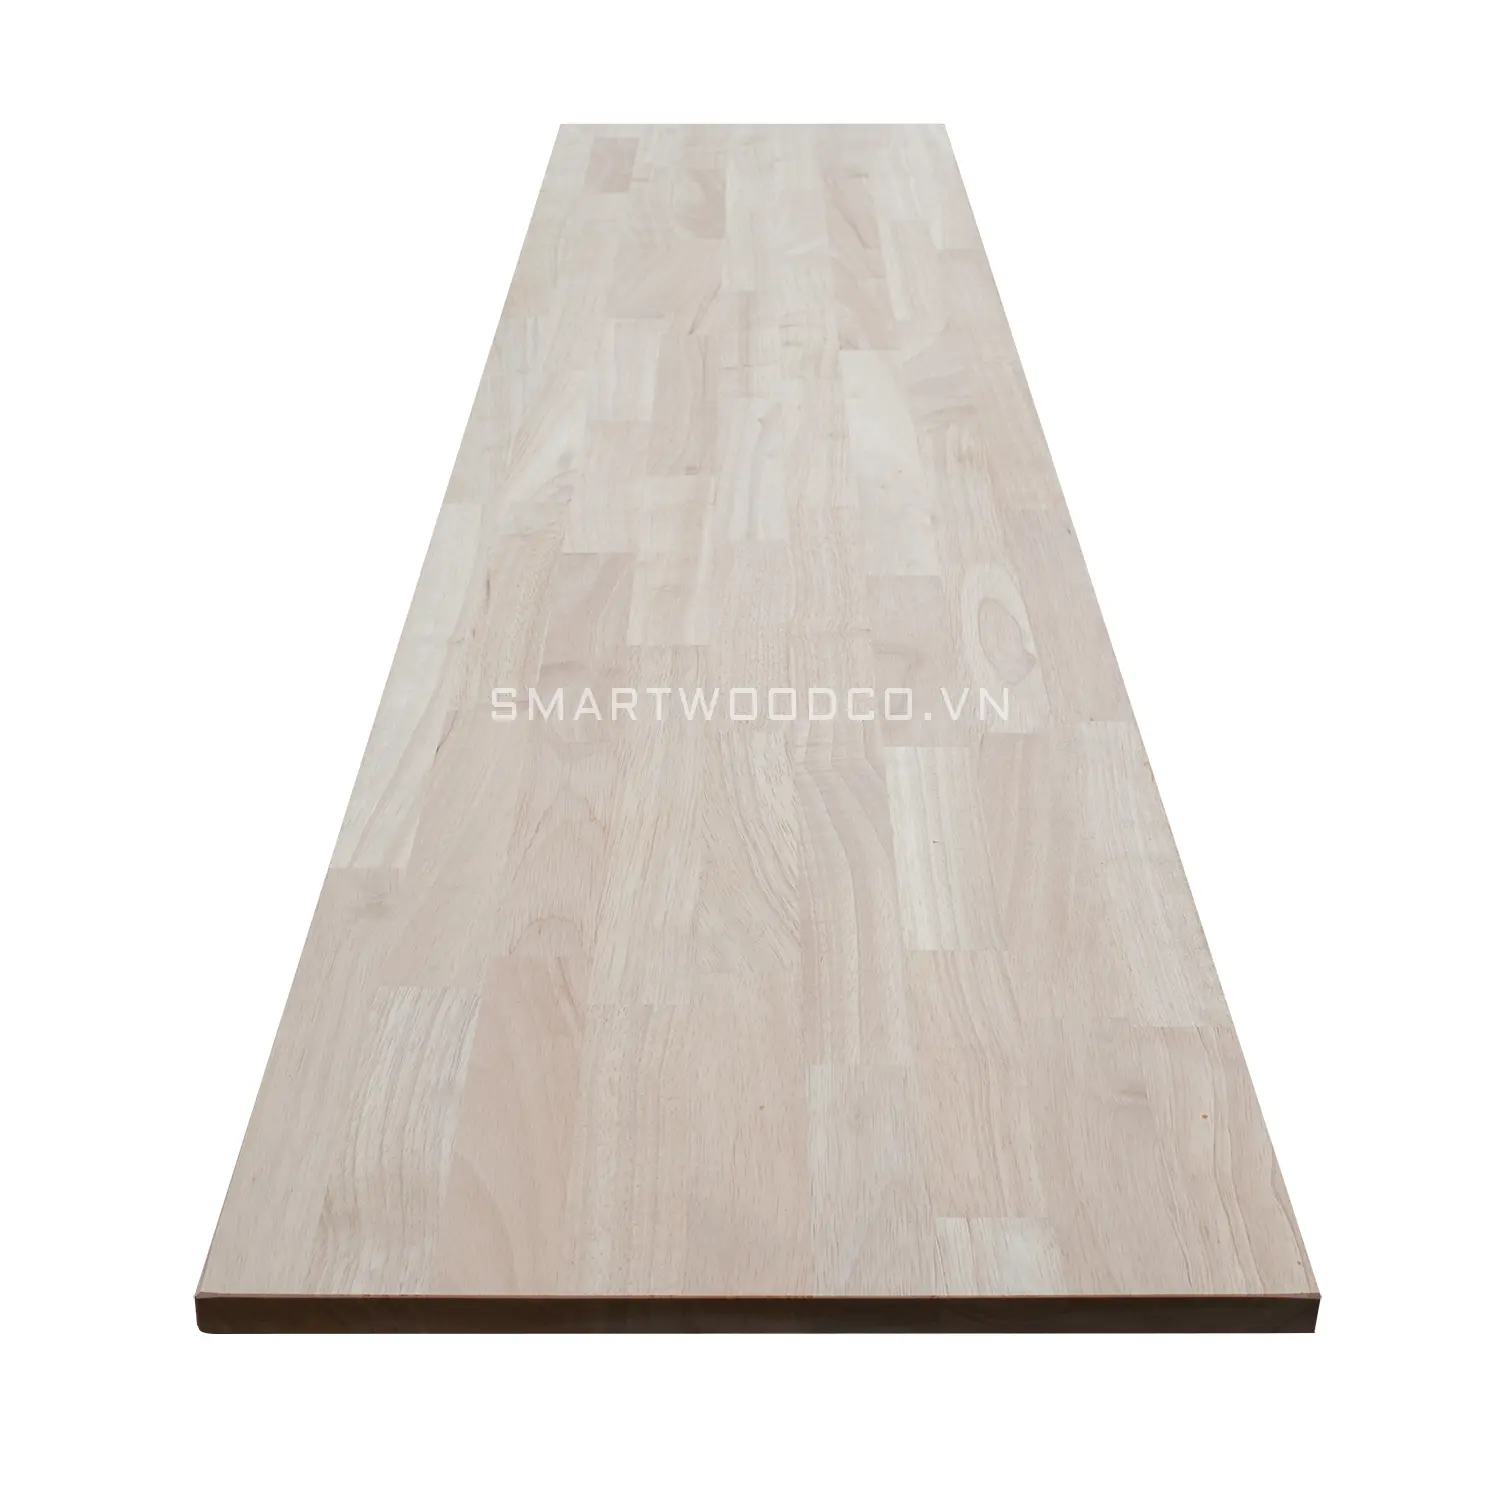 SMARTWOOD रबर लकड़ी उंगली संयुक्त बोर्ड वियतनाम से सस्ती कीमत के साथ प्राकृतिक रंग